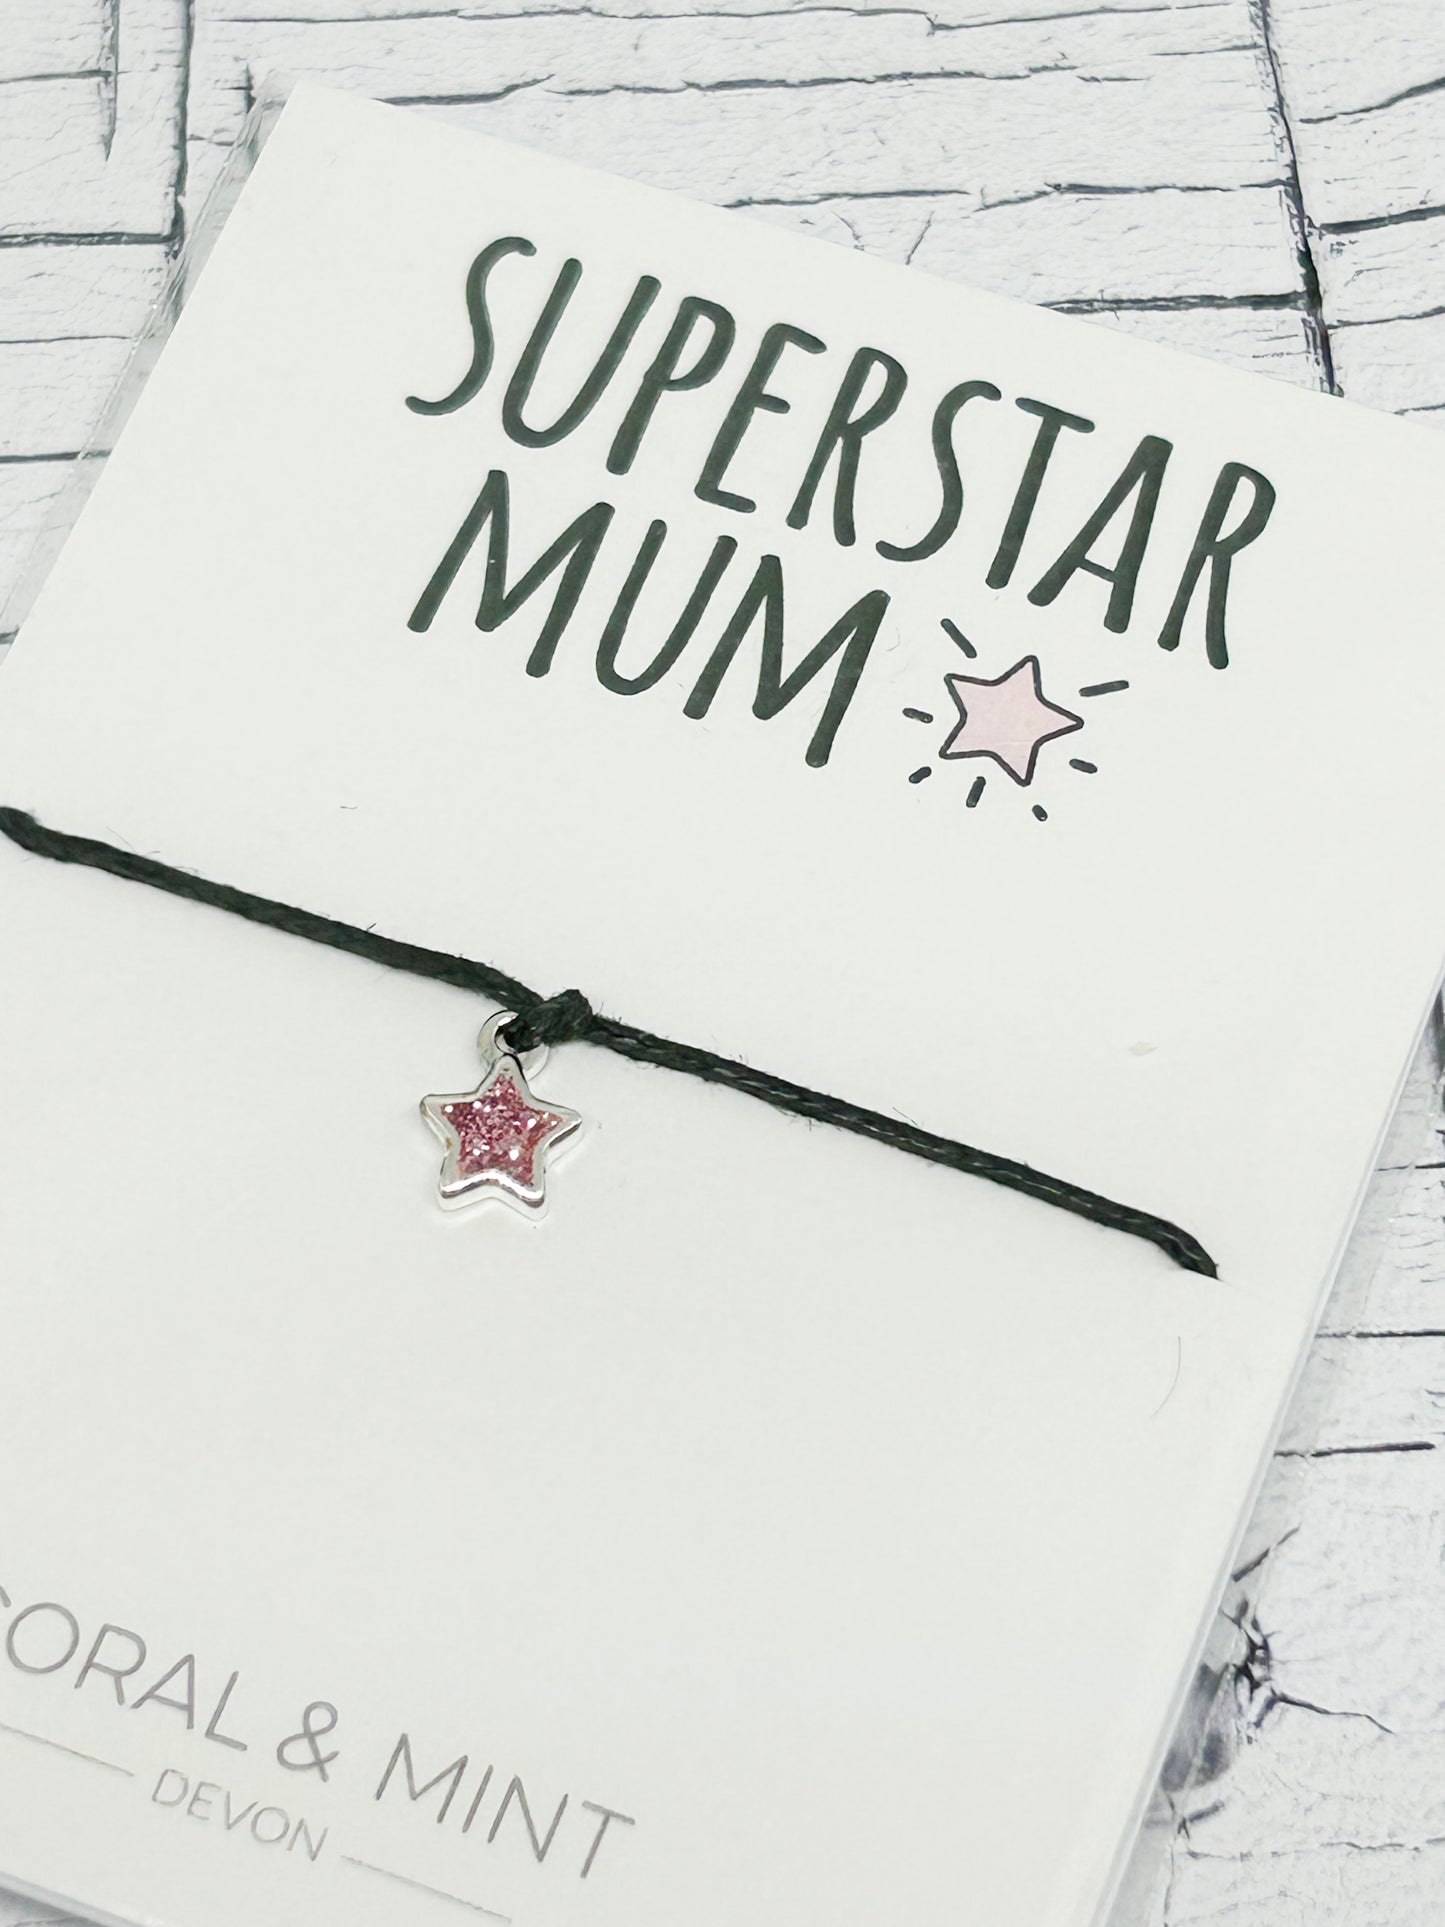 'Superstar Mum' Pink Glitter Star Sentiment Charm Bracelet.